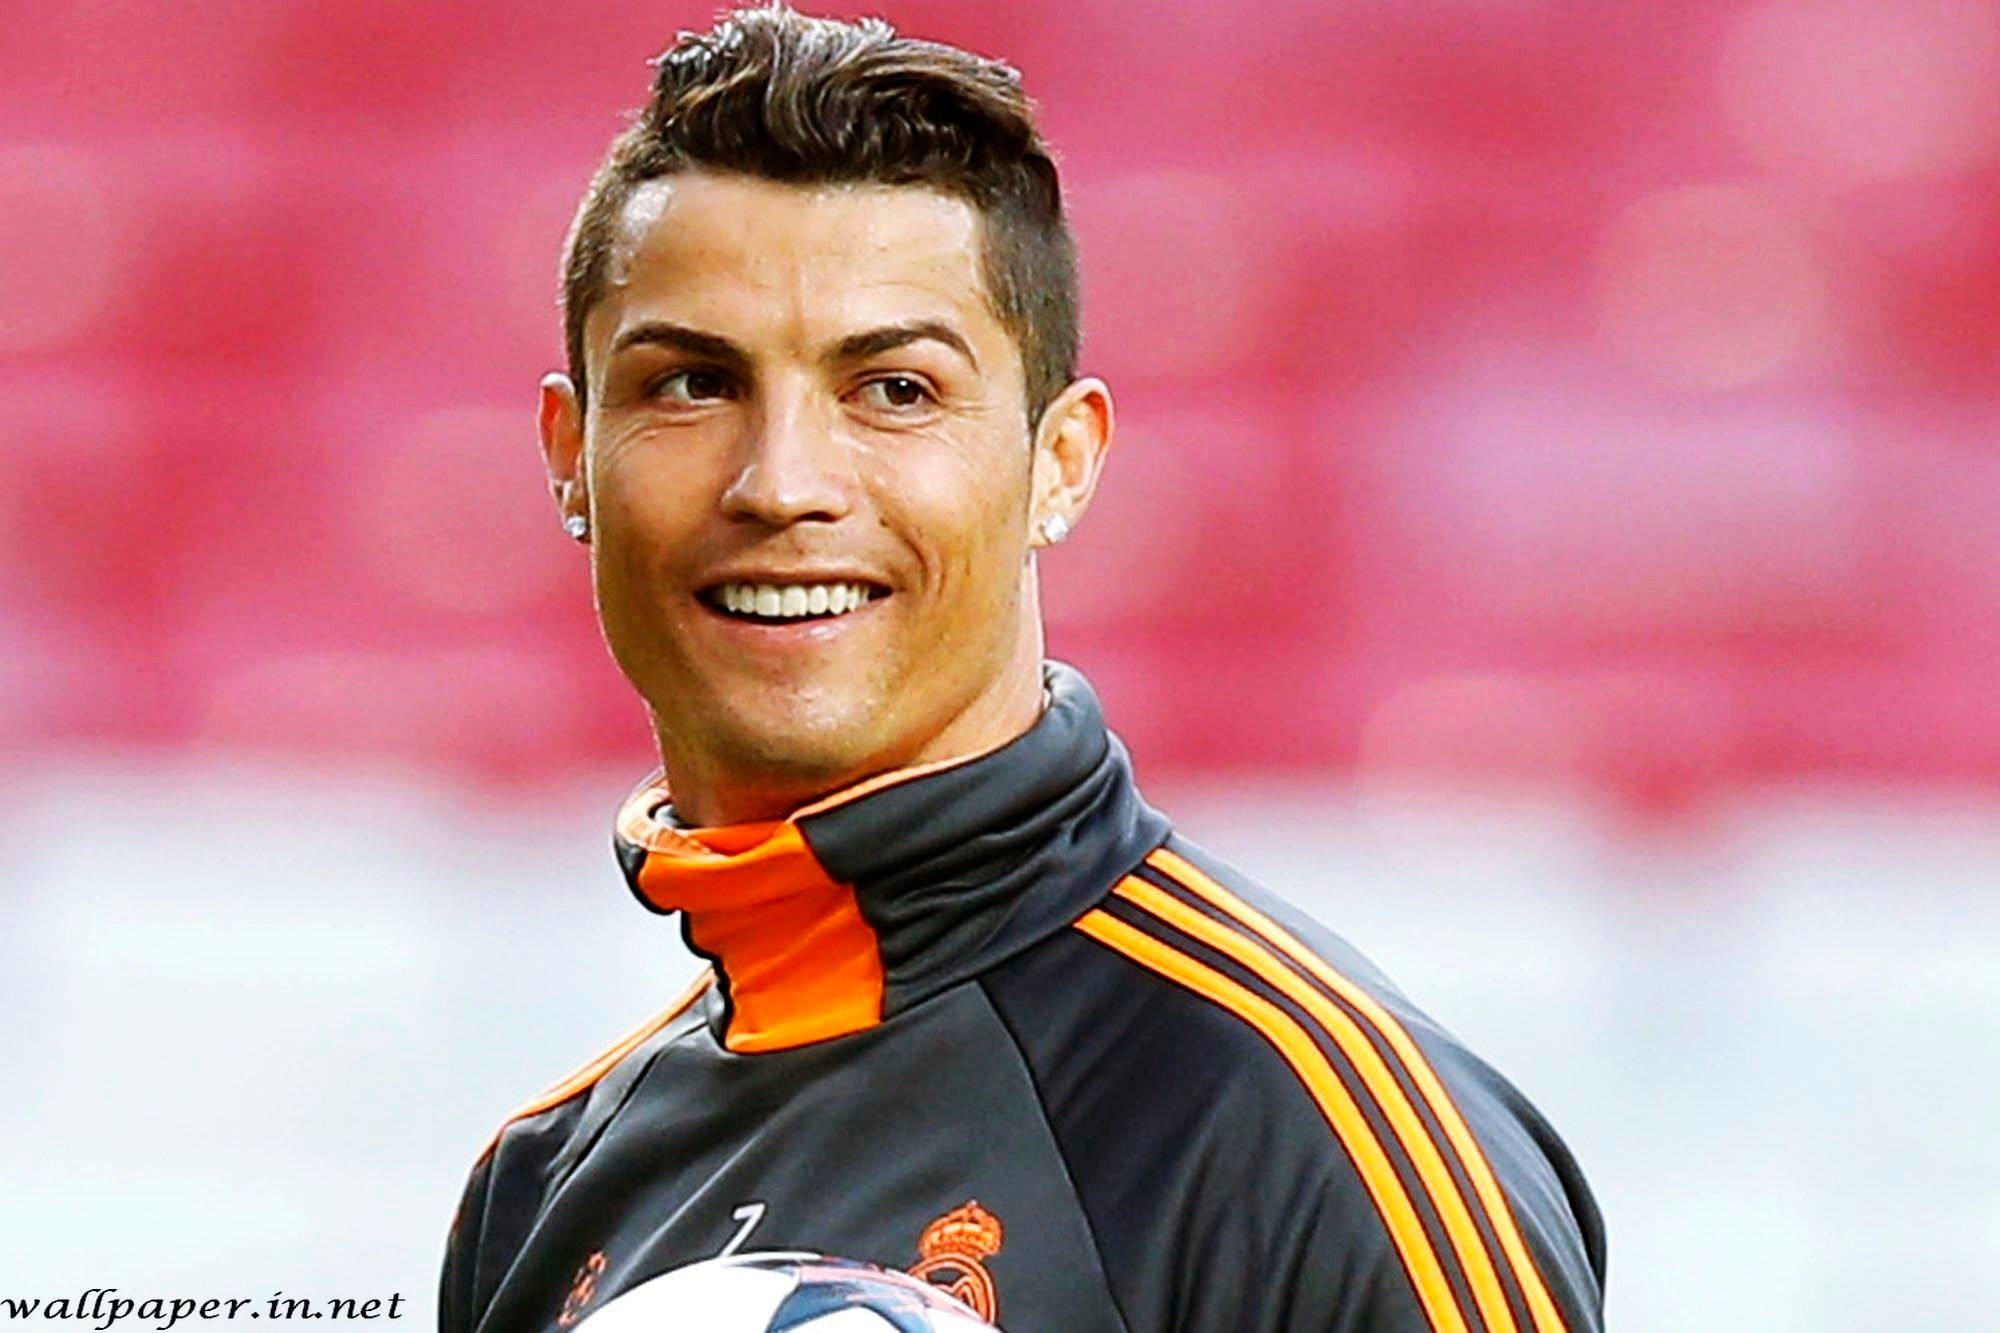 2000x1333 Cristiano-Ronaldo-HD-Wallpapers-Fifa-World-Cup-2014.